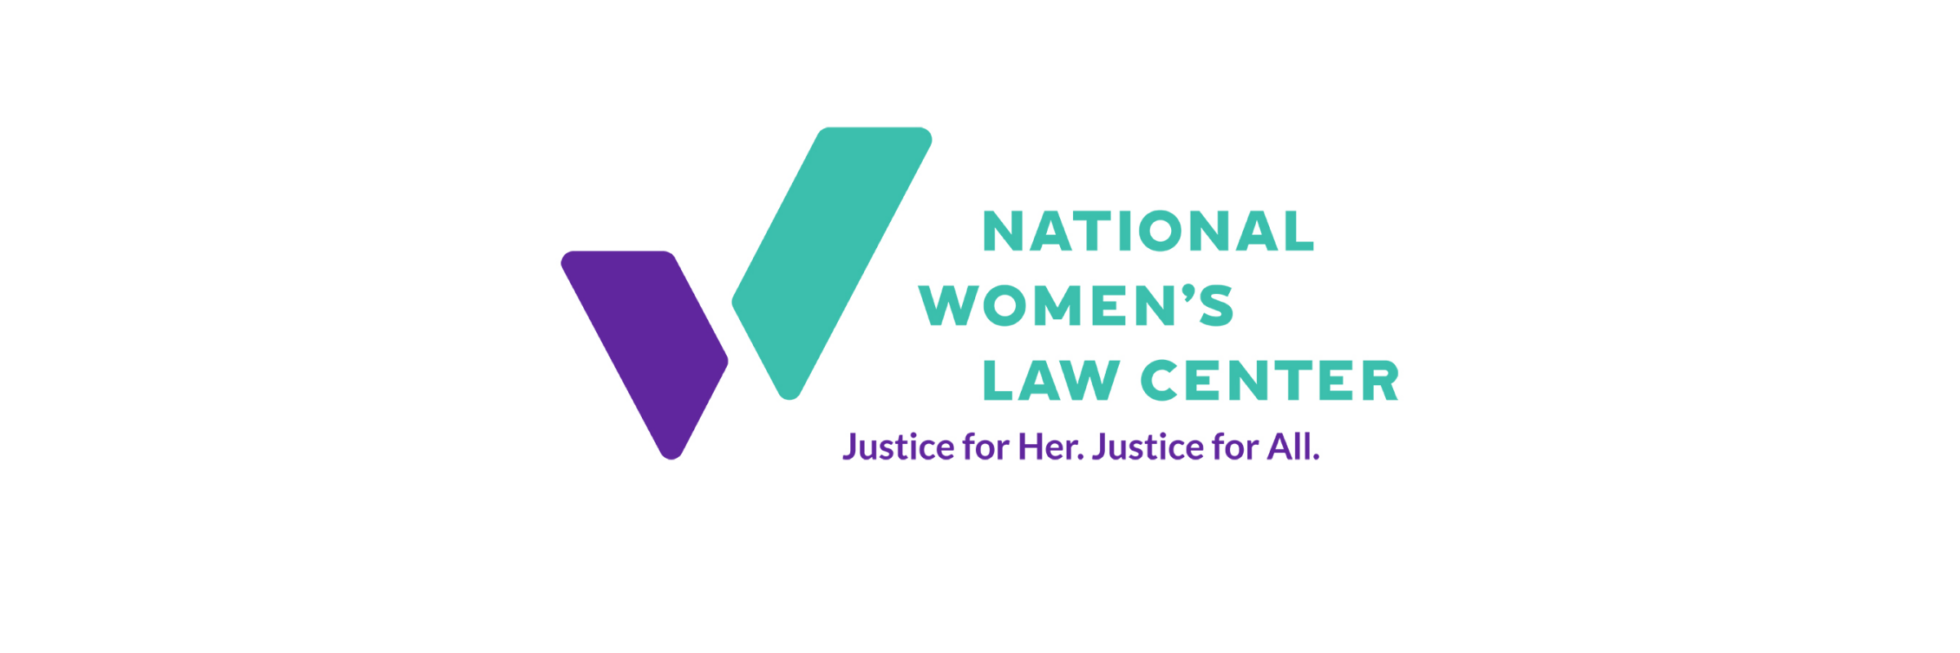 National Women’s Law Center Google Grant Case Study